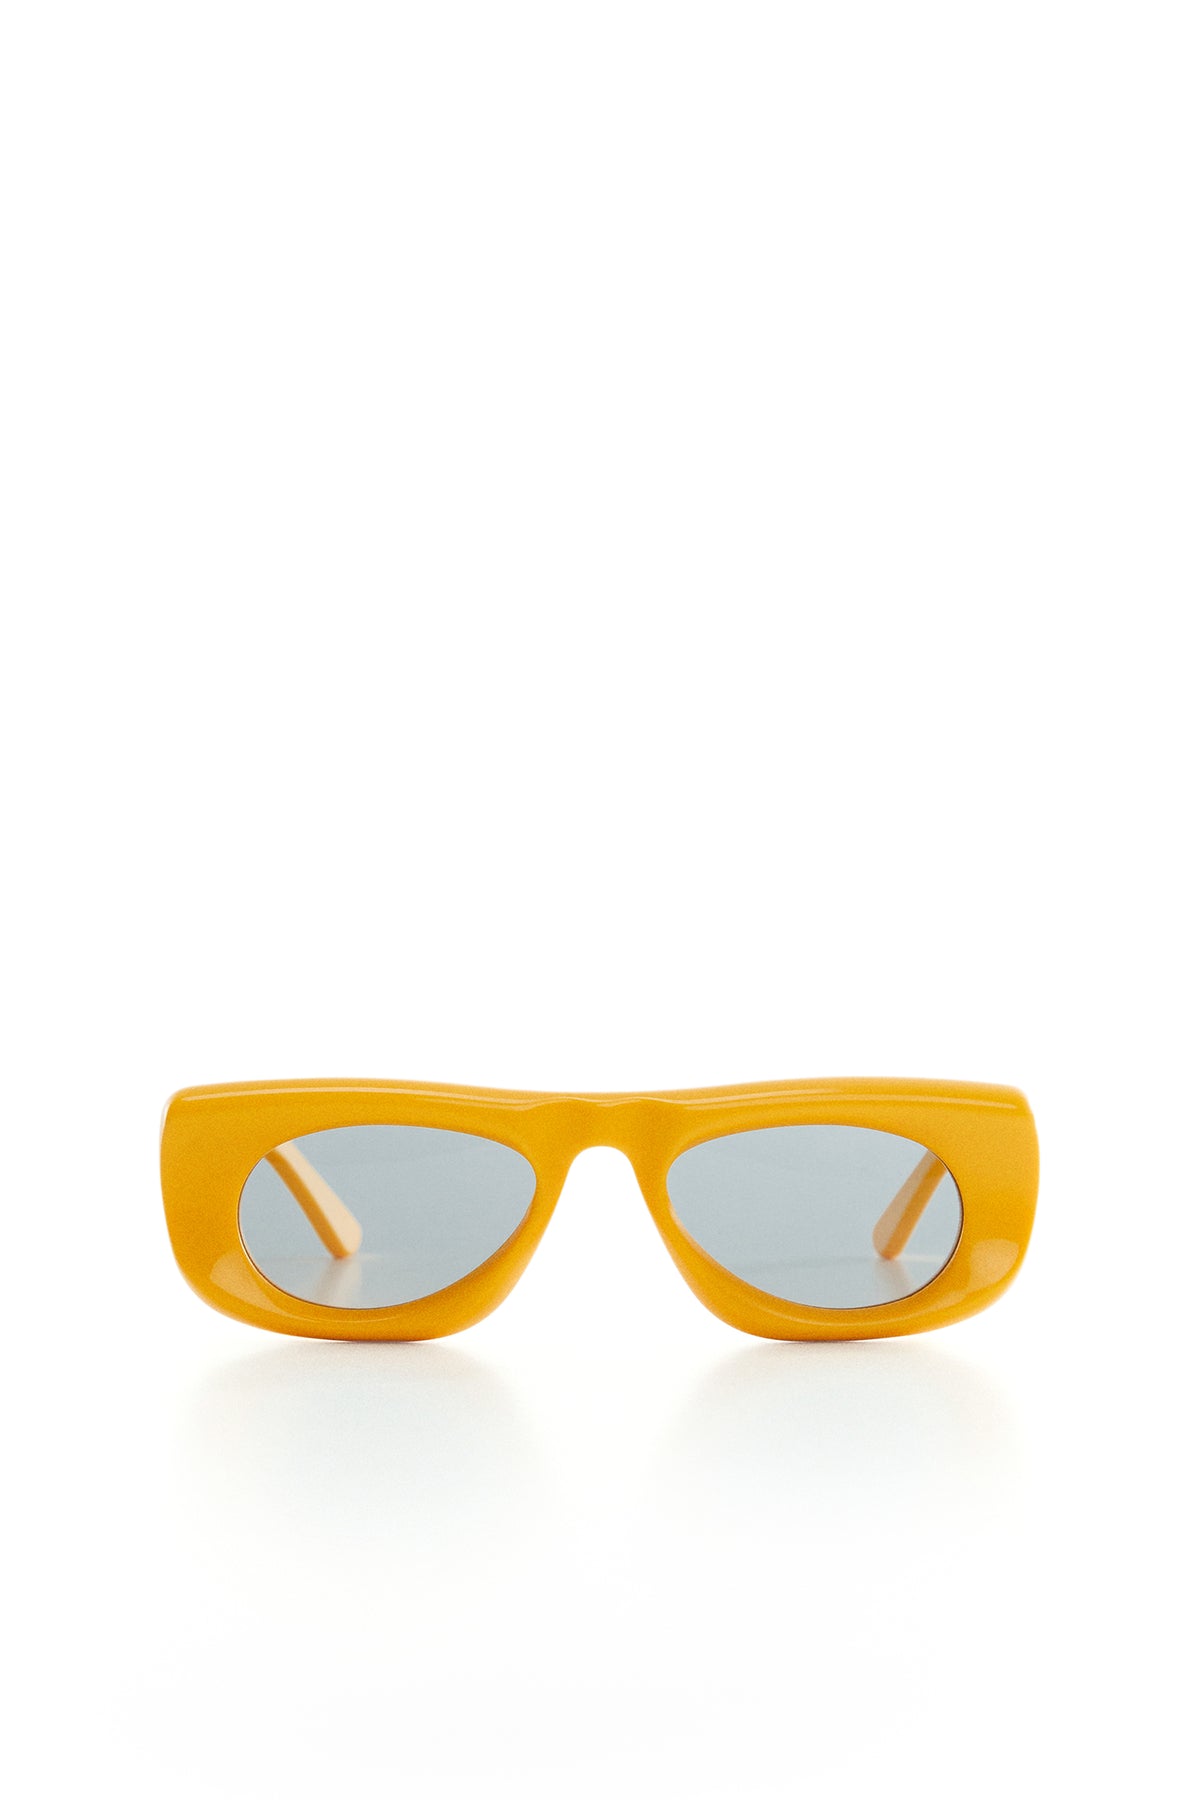 SM X MANGO Yuvi Sunglasses in Sponge Yellow